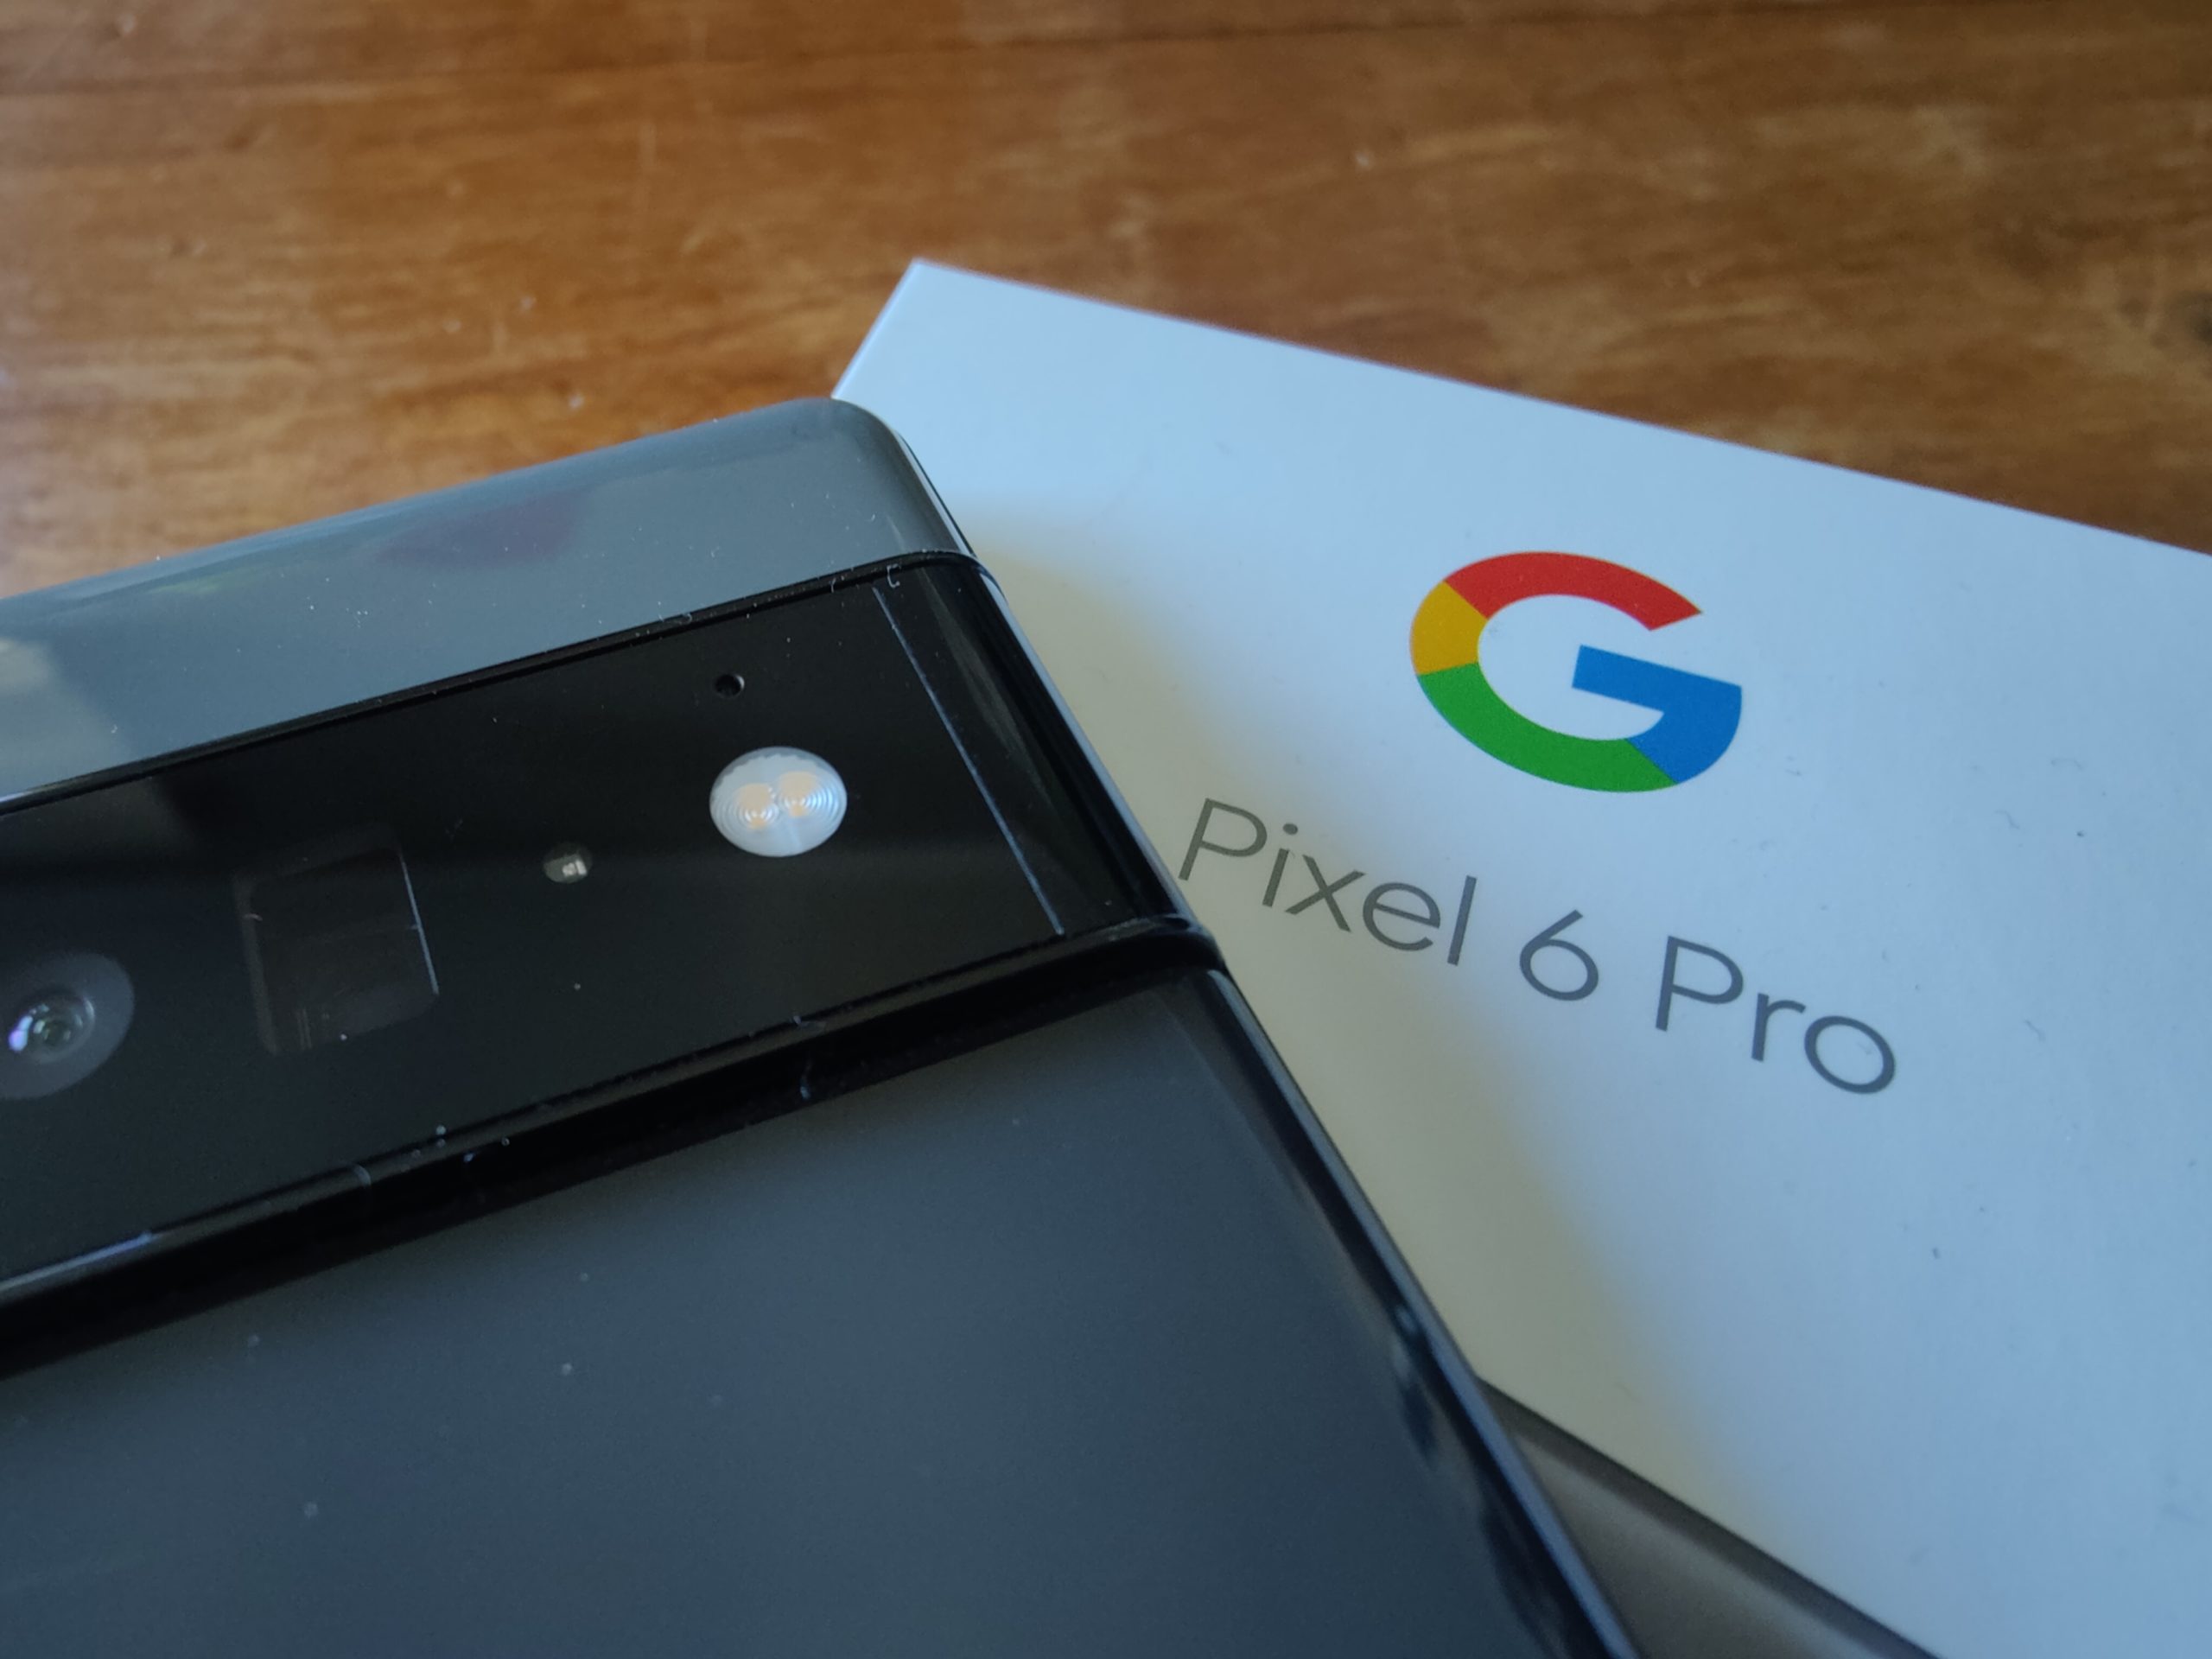 Buy Google Pixel 6 Pro - Telstra